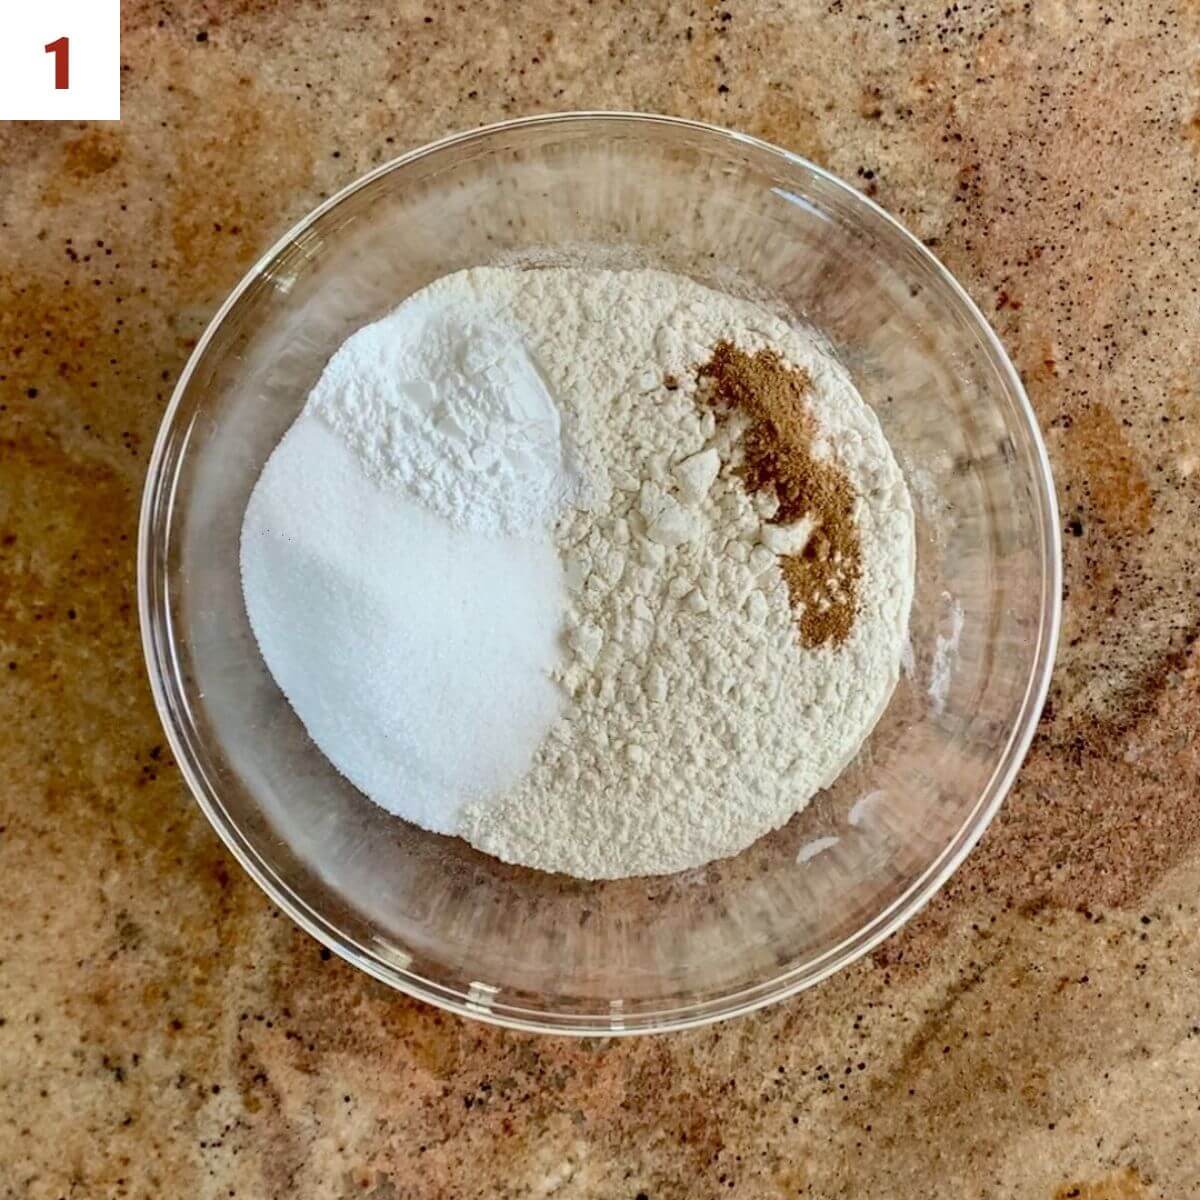 Flour, sugar, baking powder, nutmeg, & salt in a glass bowl.